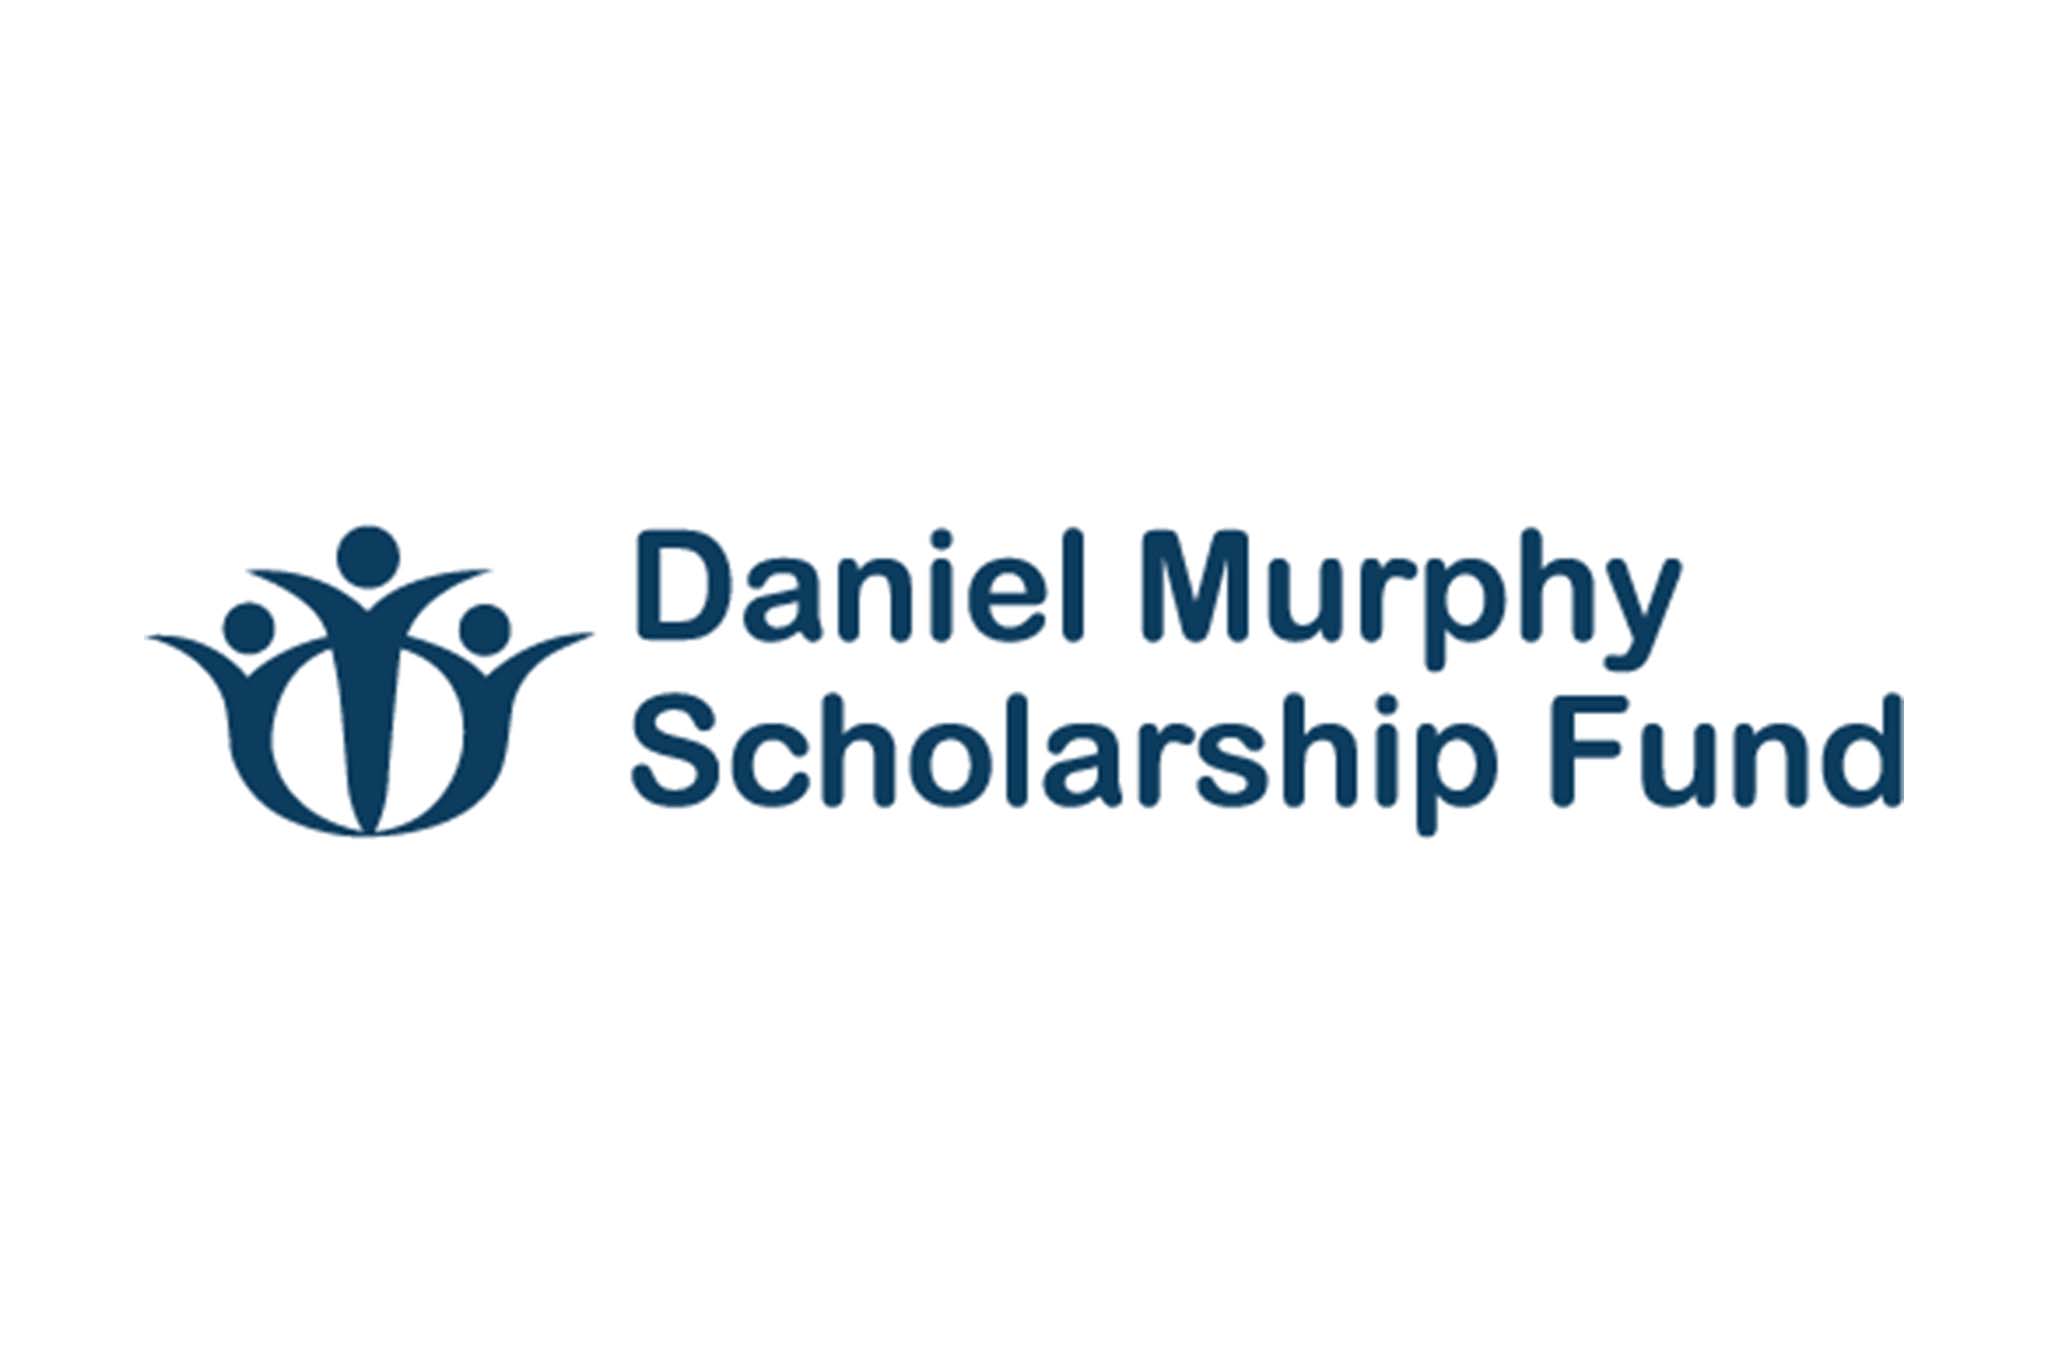 Daniel Murphy Scholarship Fund logo